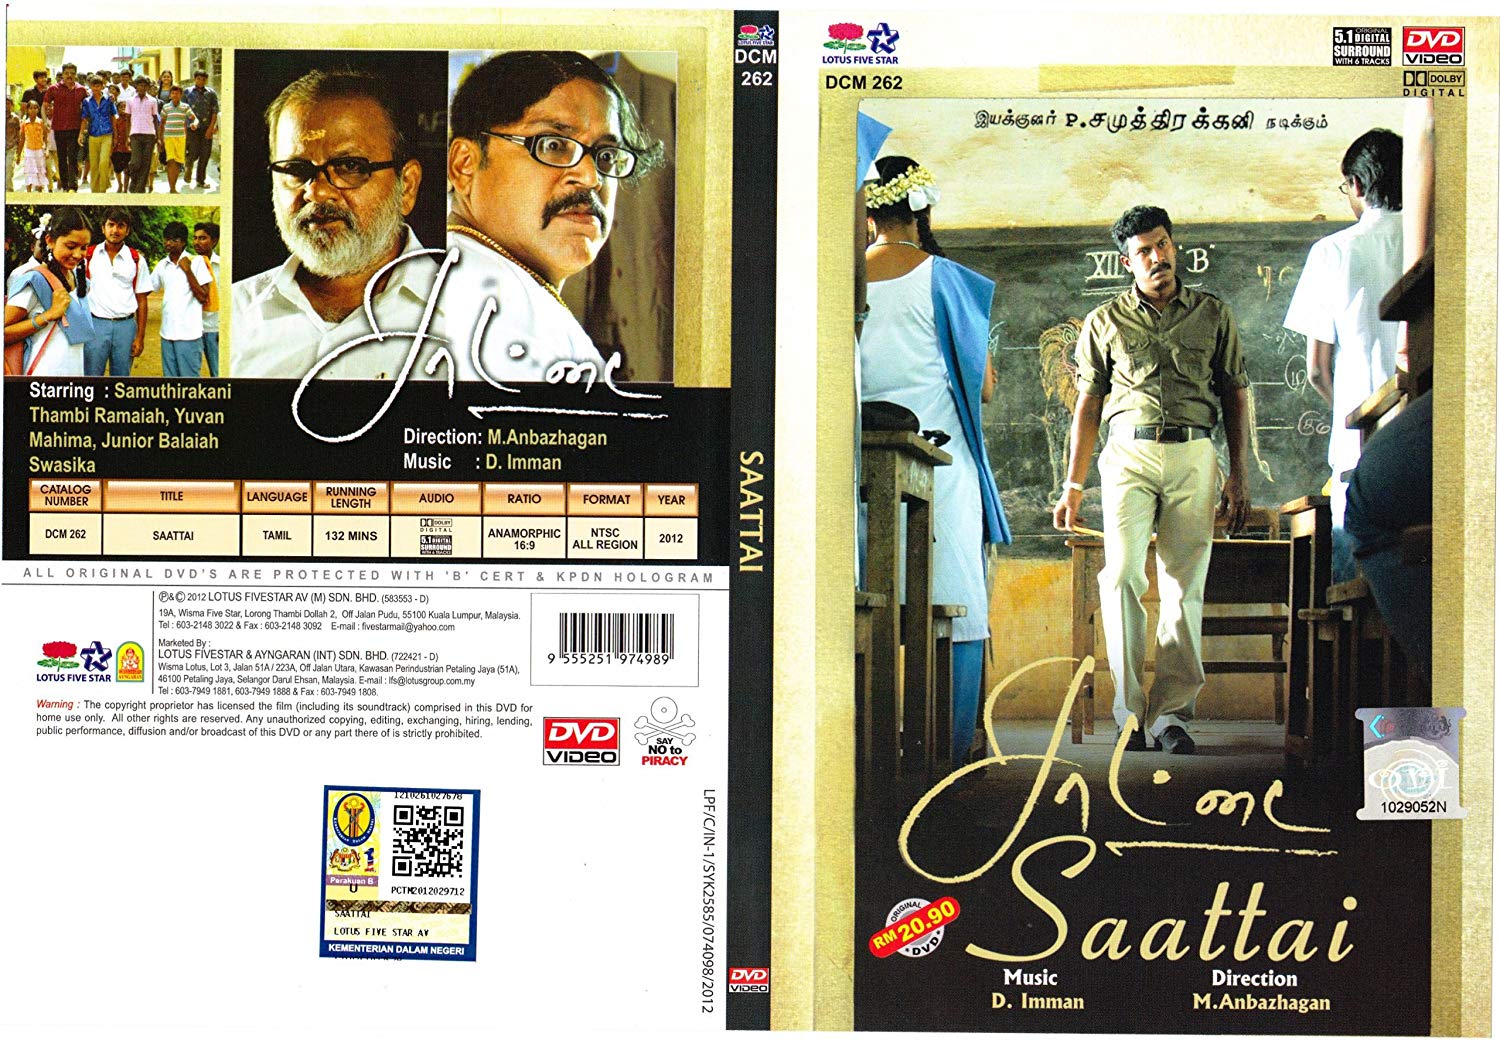 Tamil hd movies download free